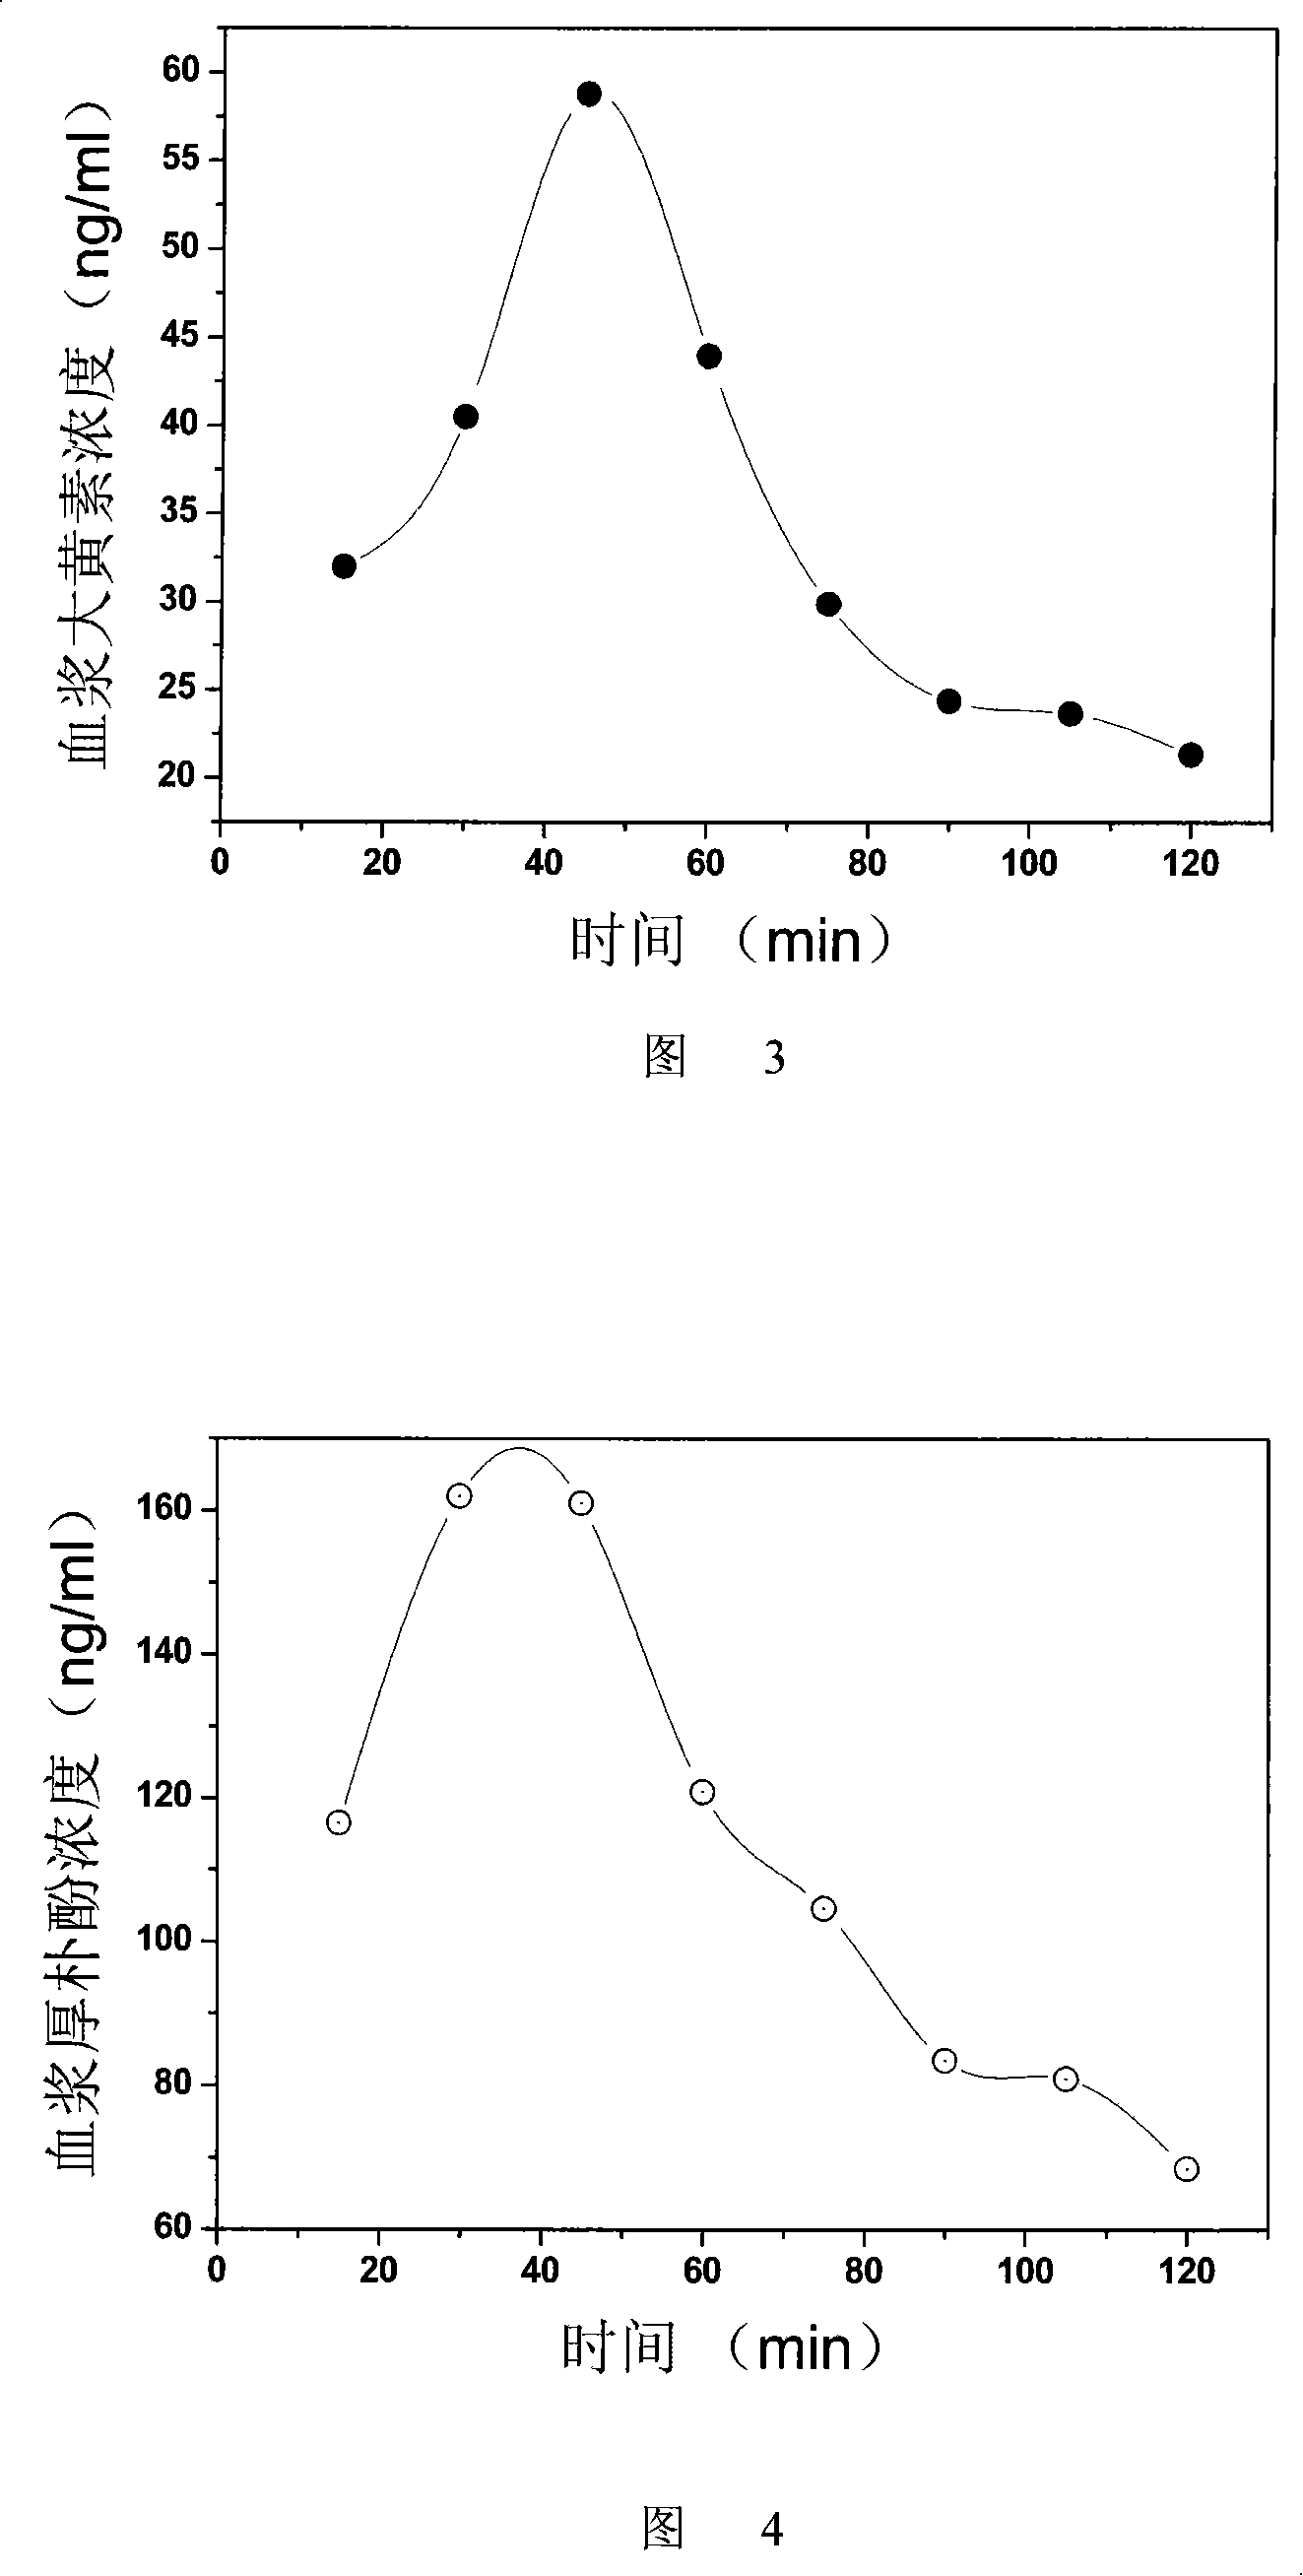 Dachengqi tang animal blood plasma freeze-dried powder and method for preparing the same